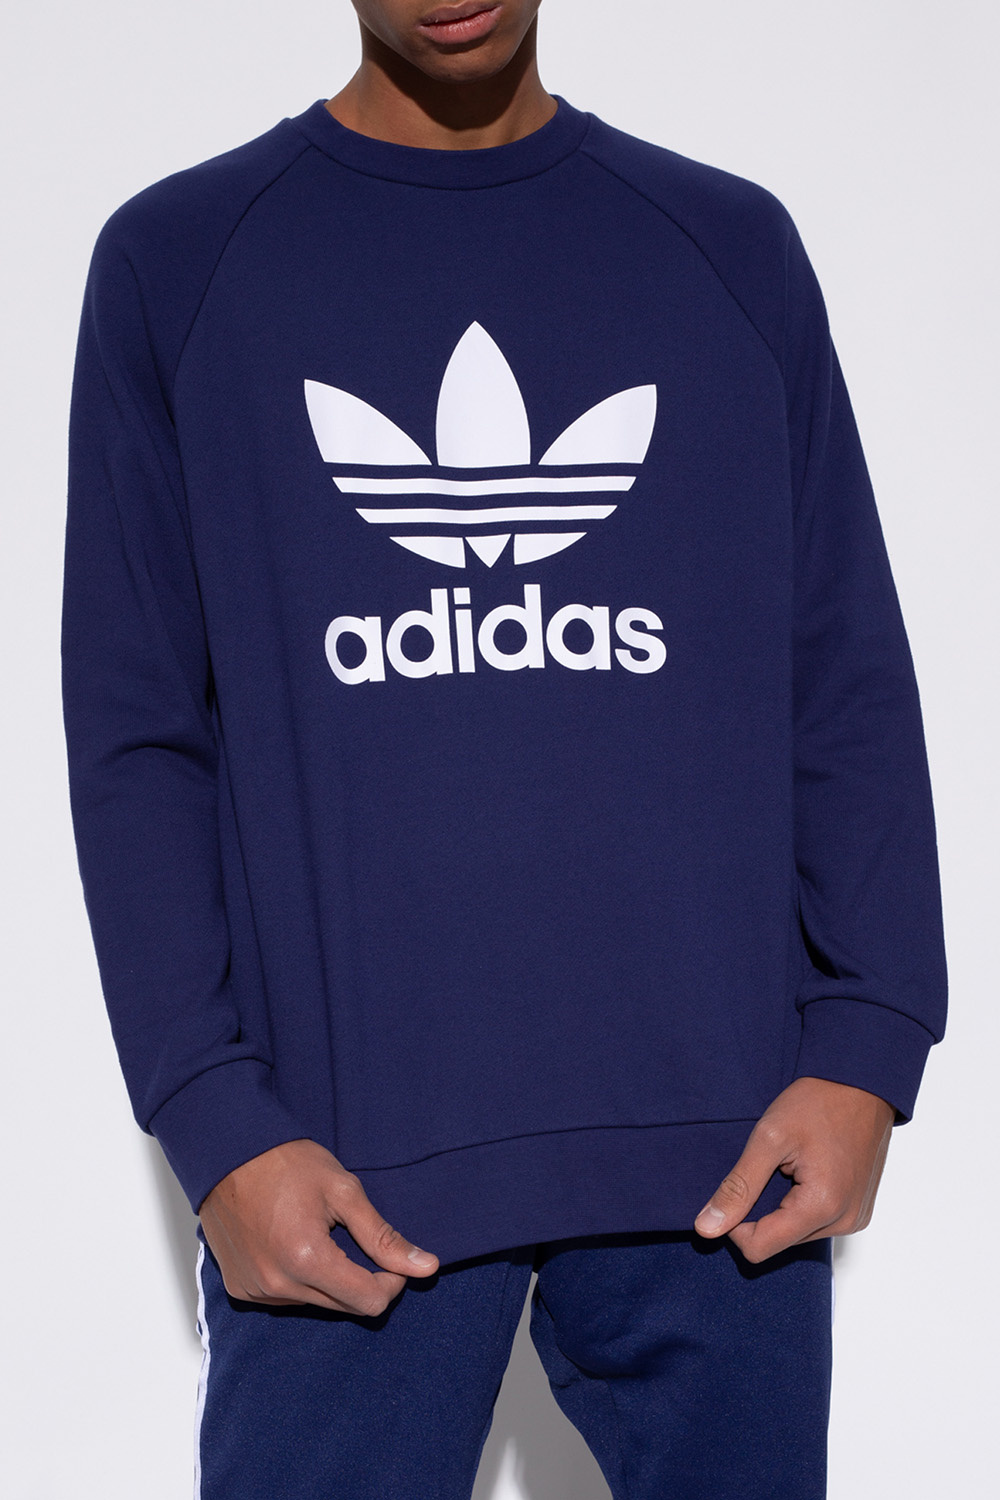 adidas blazer Originals Sweatshirt with logo